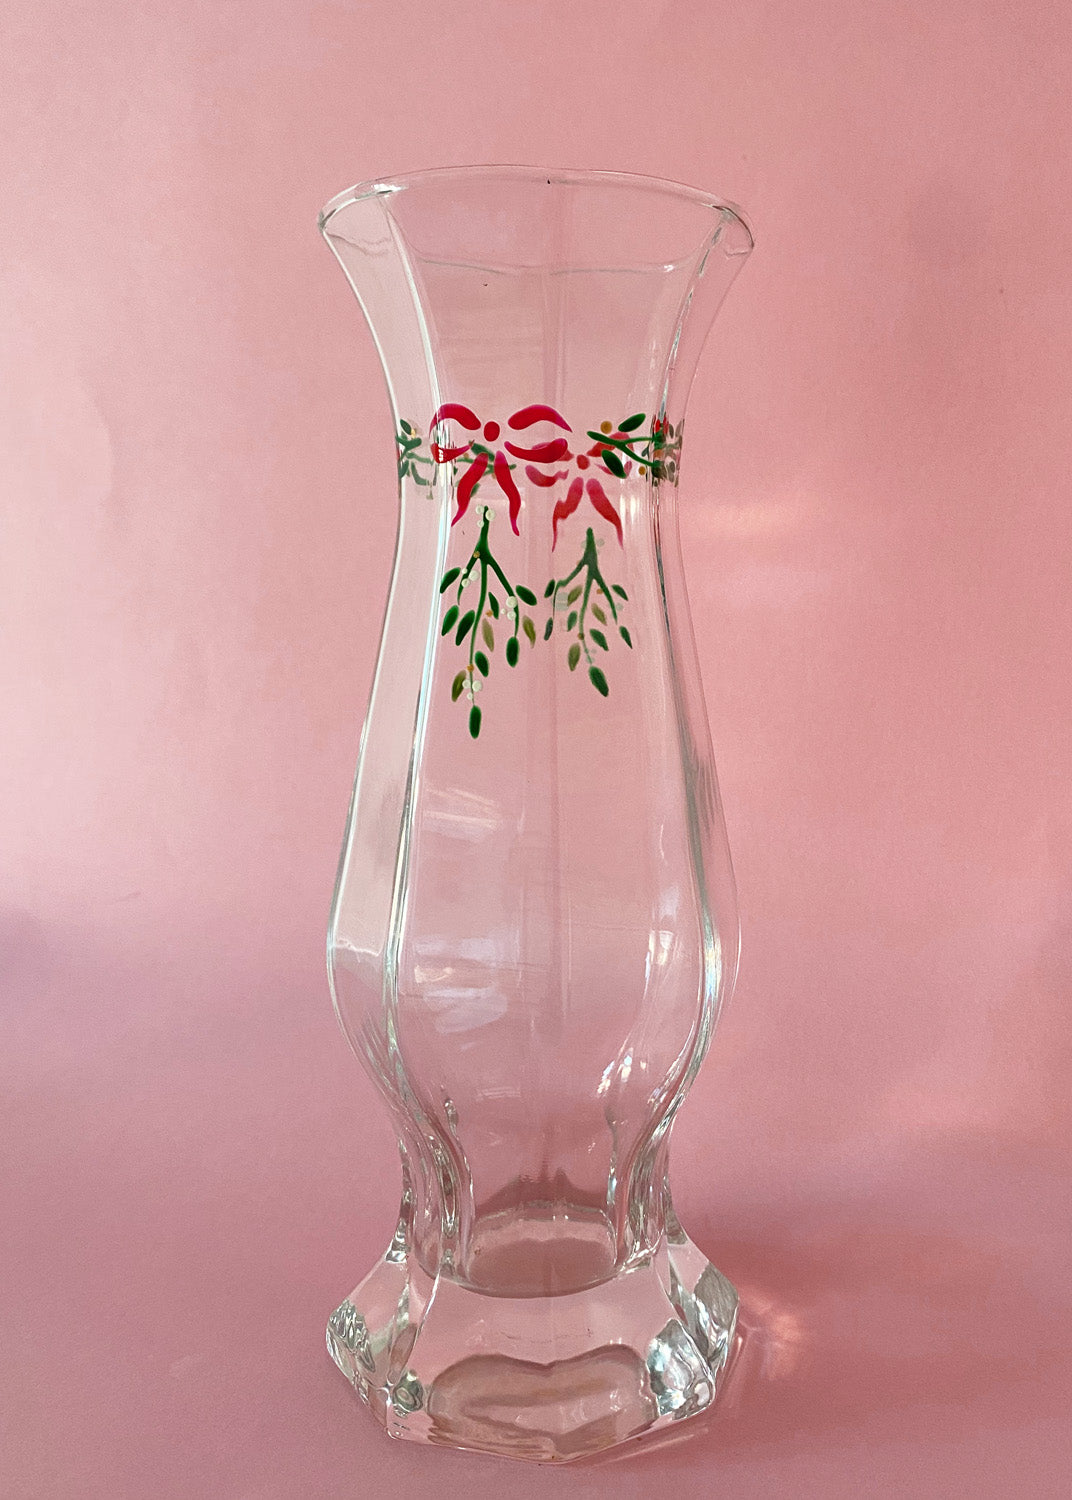 Vintage art deco style festive vase